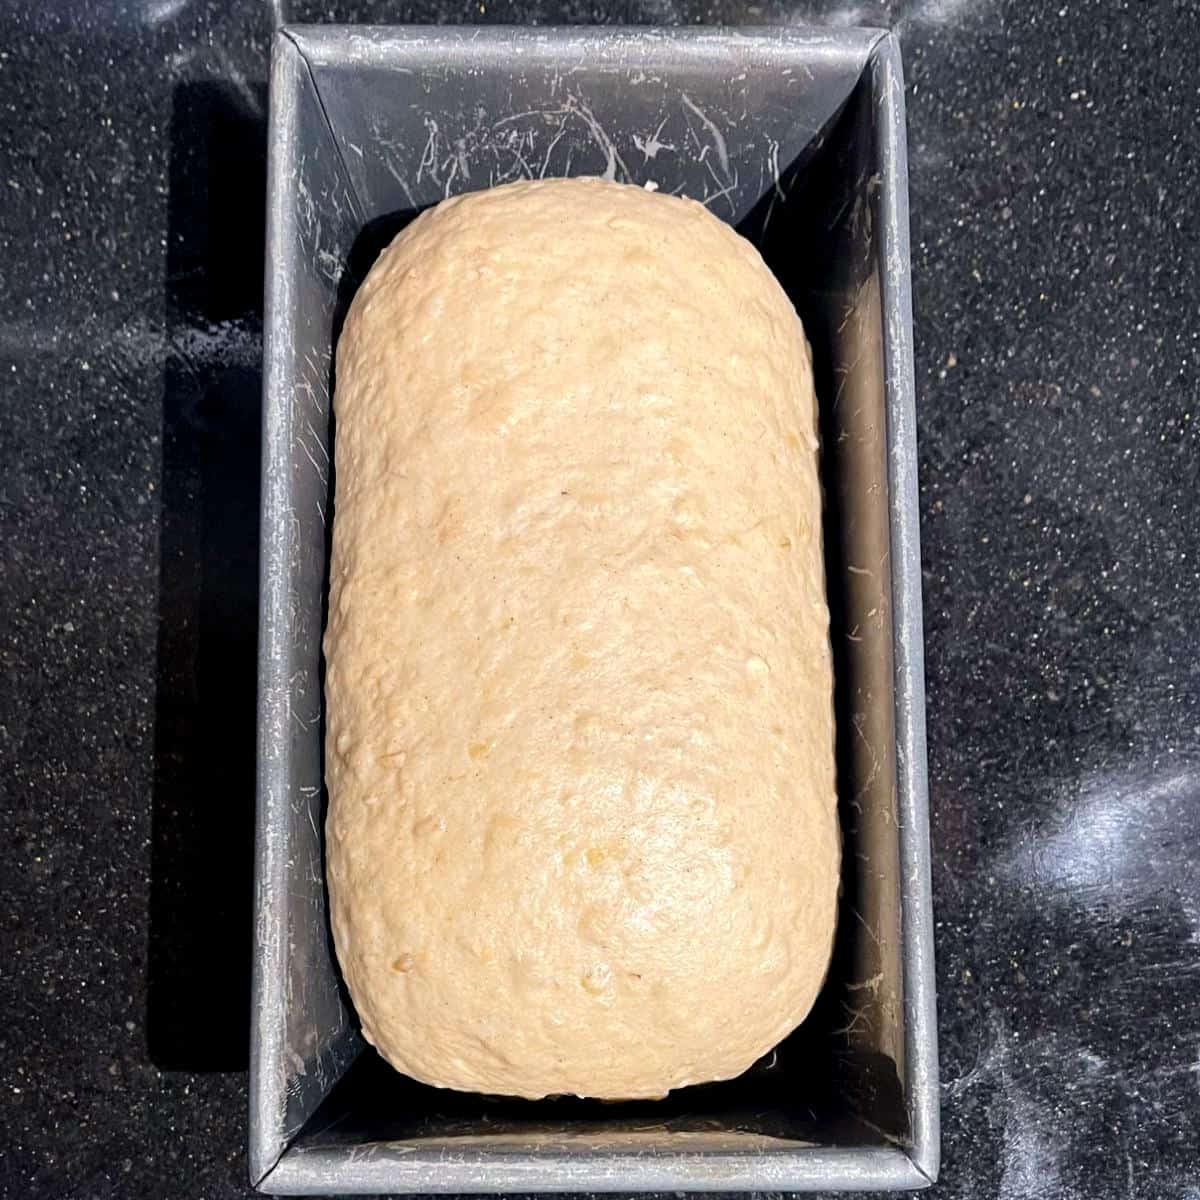 Dough in loaf pan.